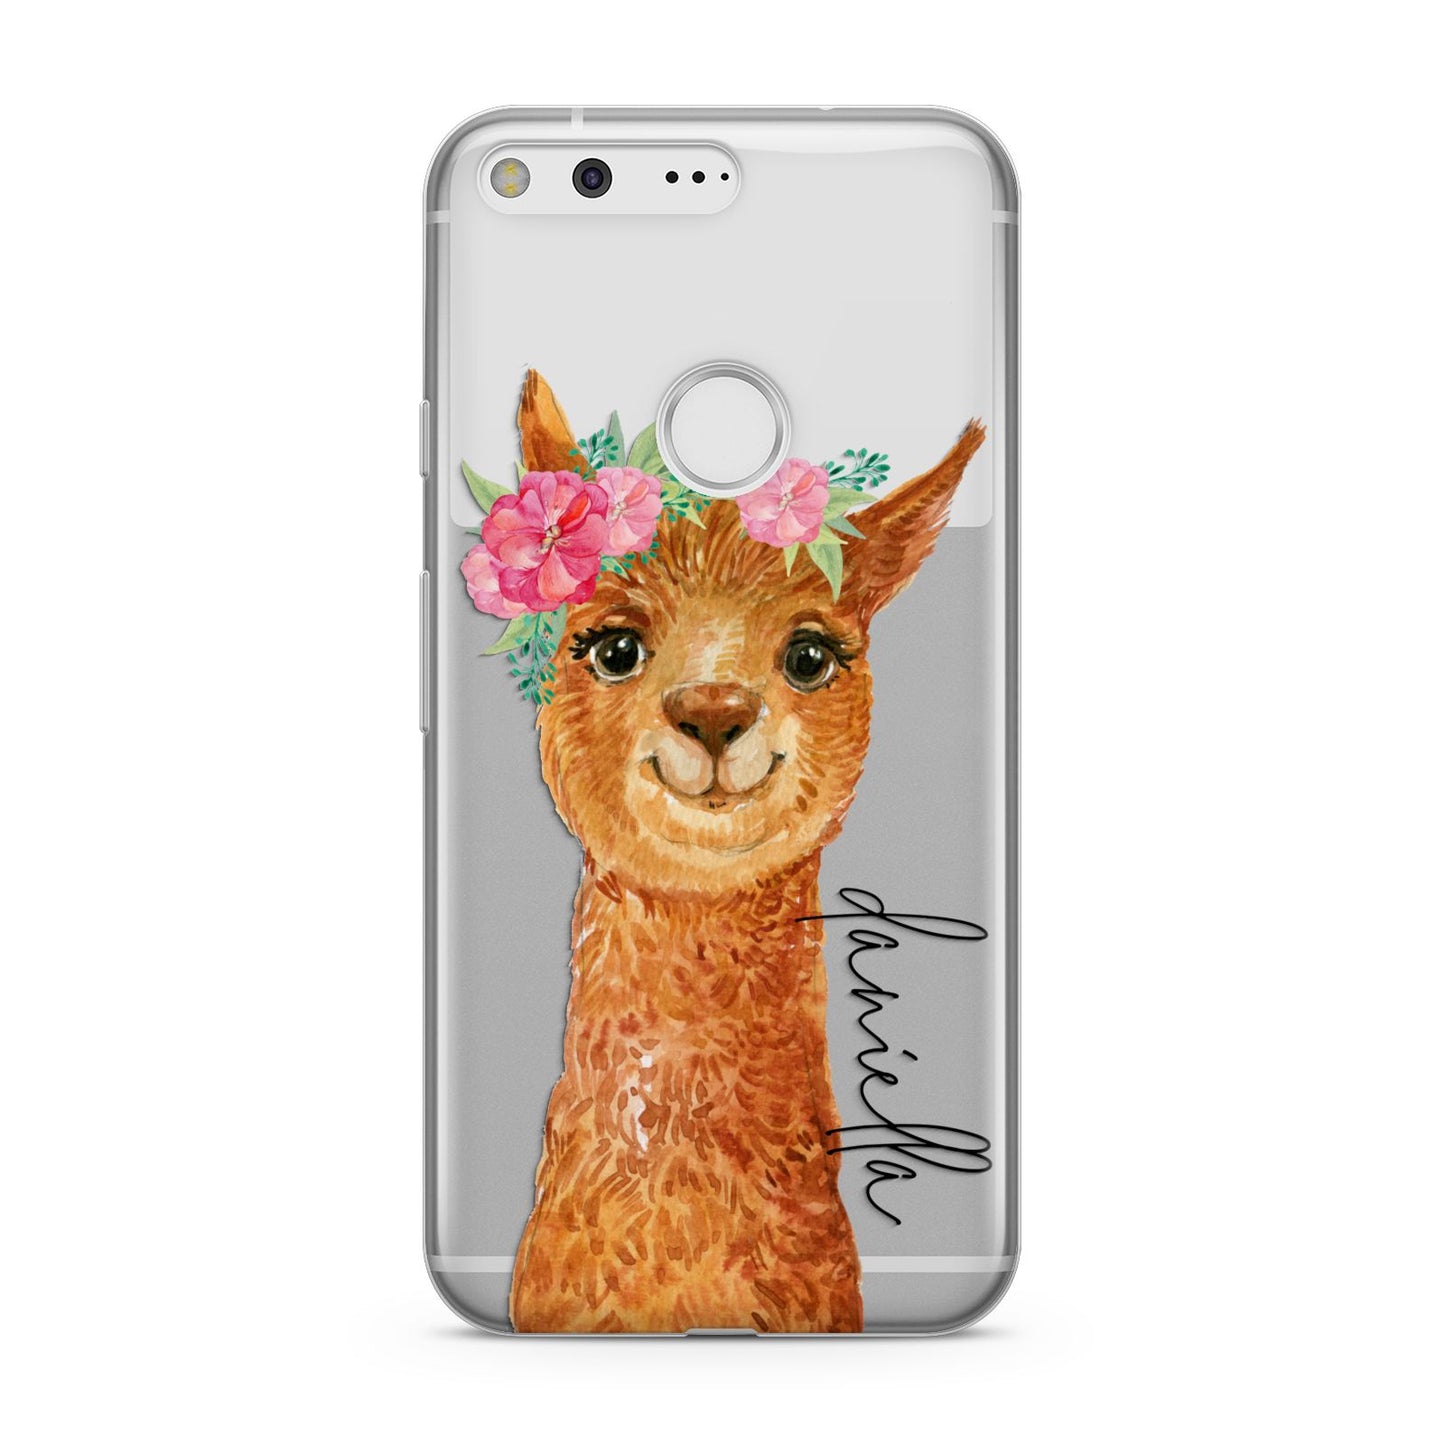 Personalised Llama Google Pixel Case